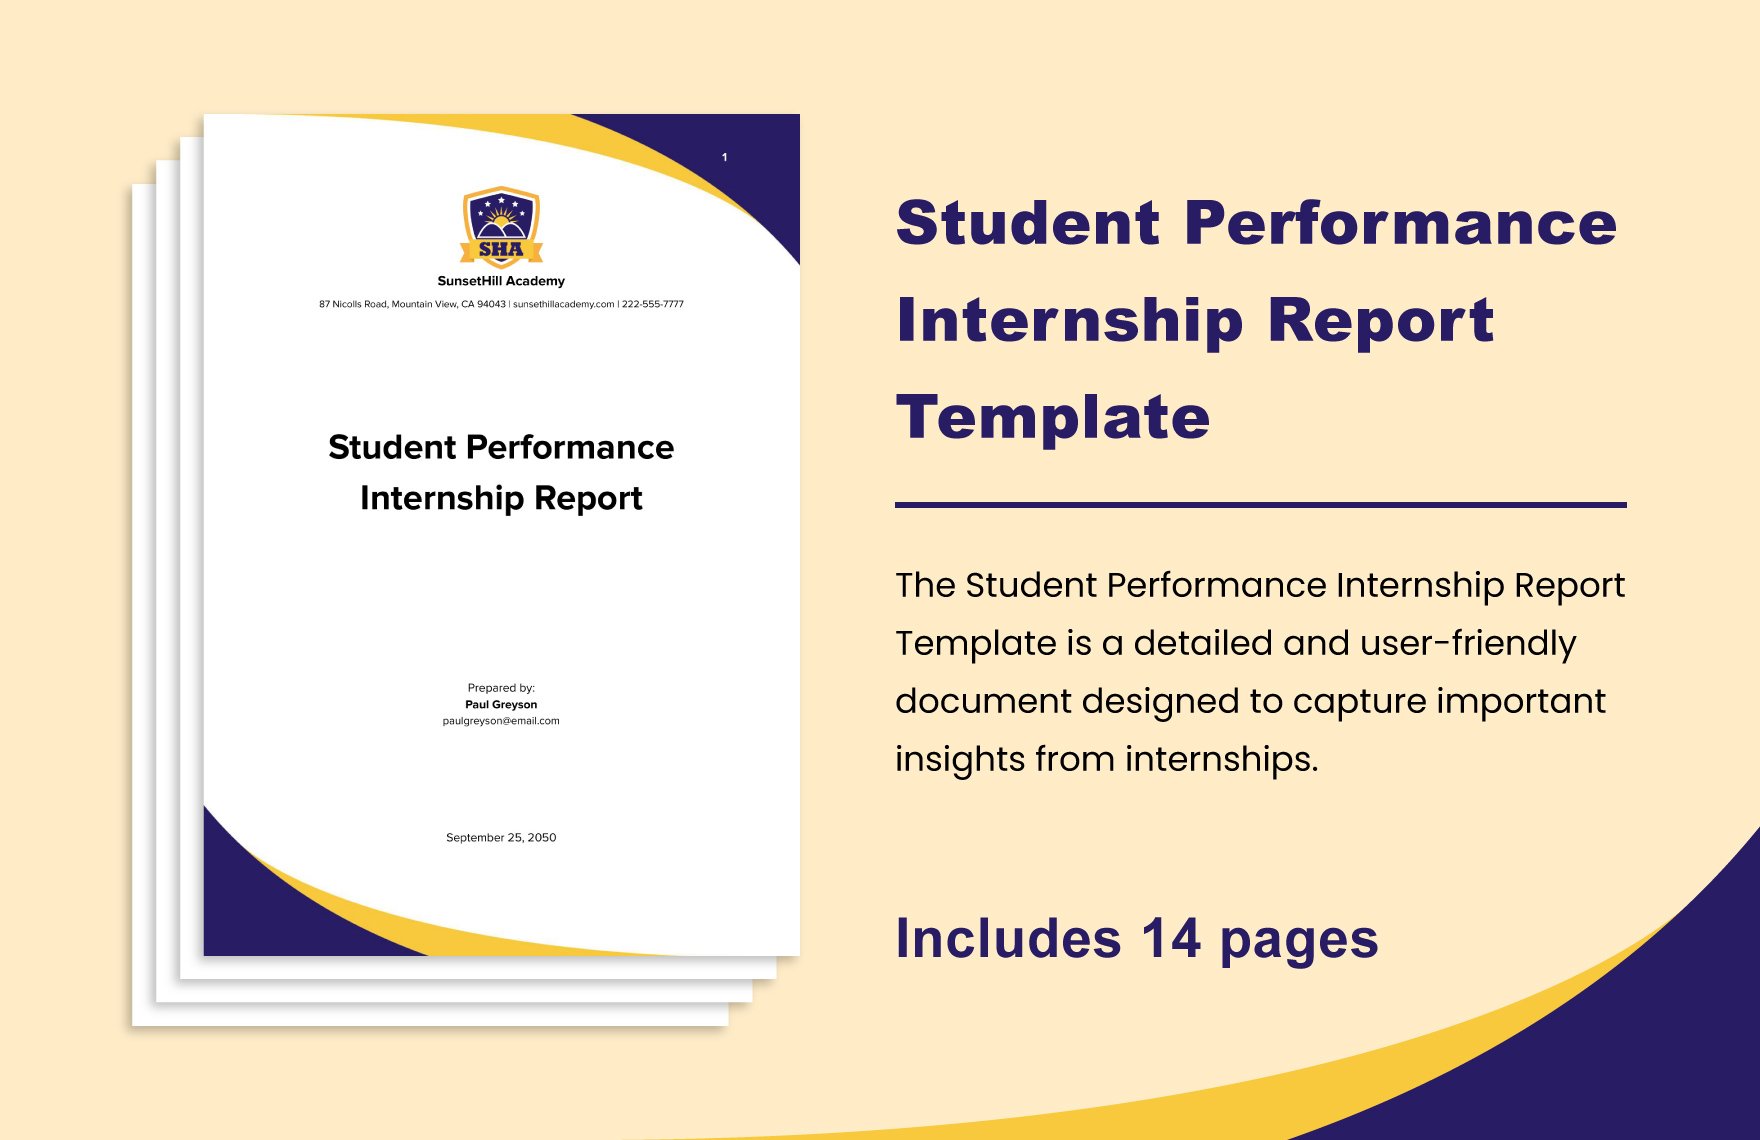 Student Performance Internship Report Template